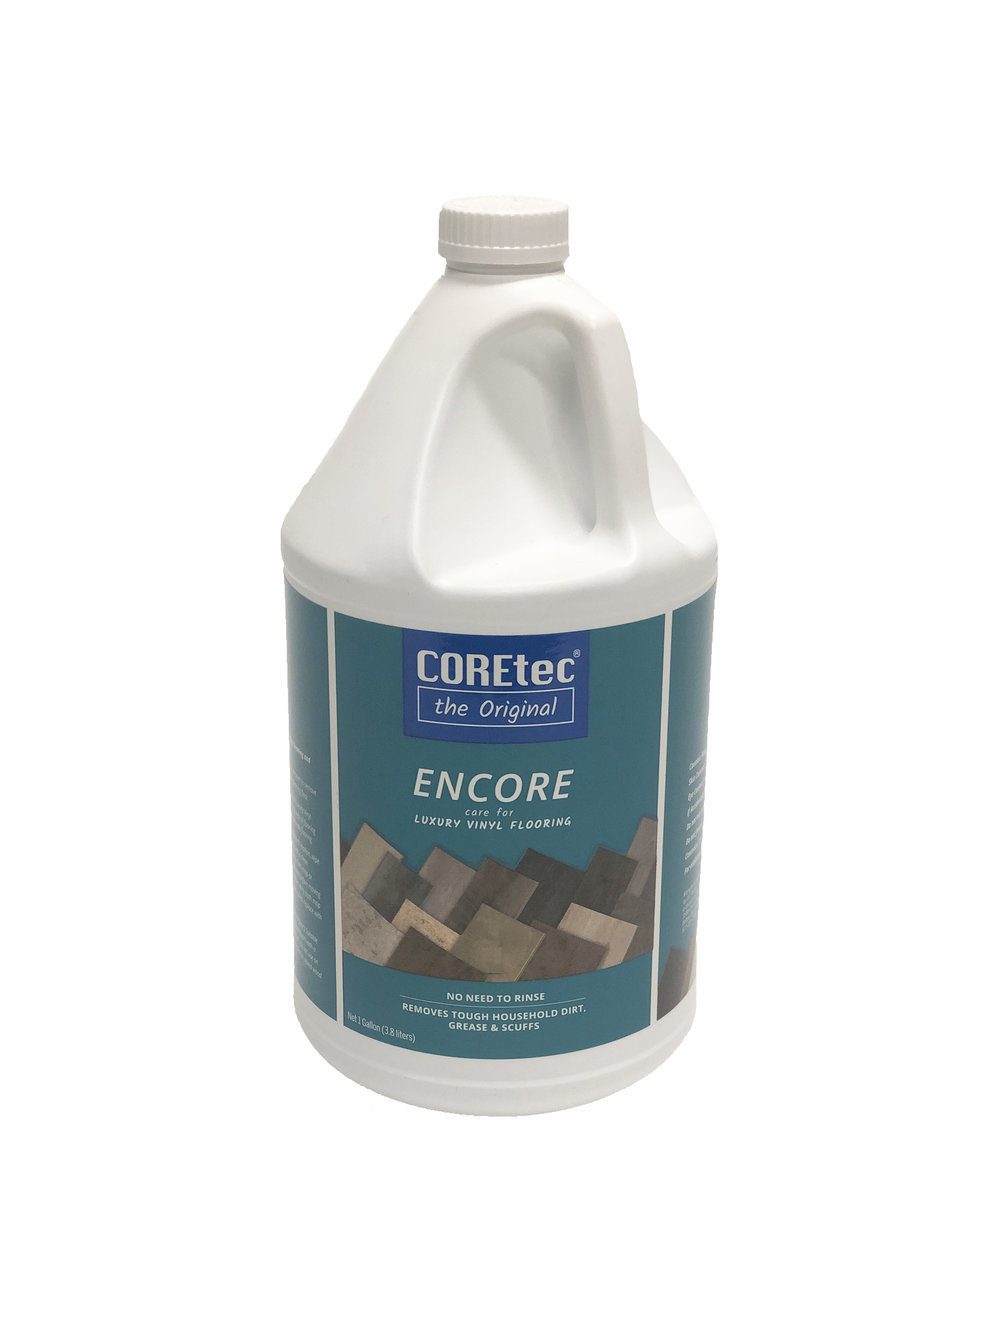 Coretec Encore Cleaner 1 Gallon Mouery S Flooring